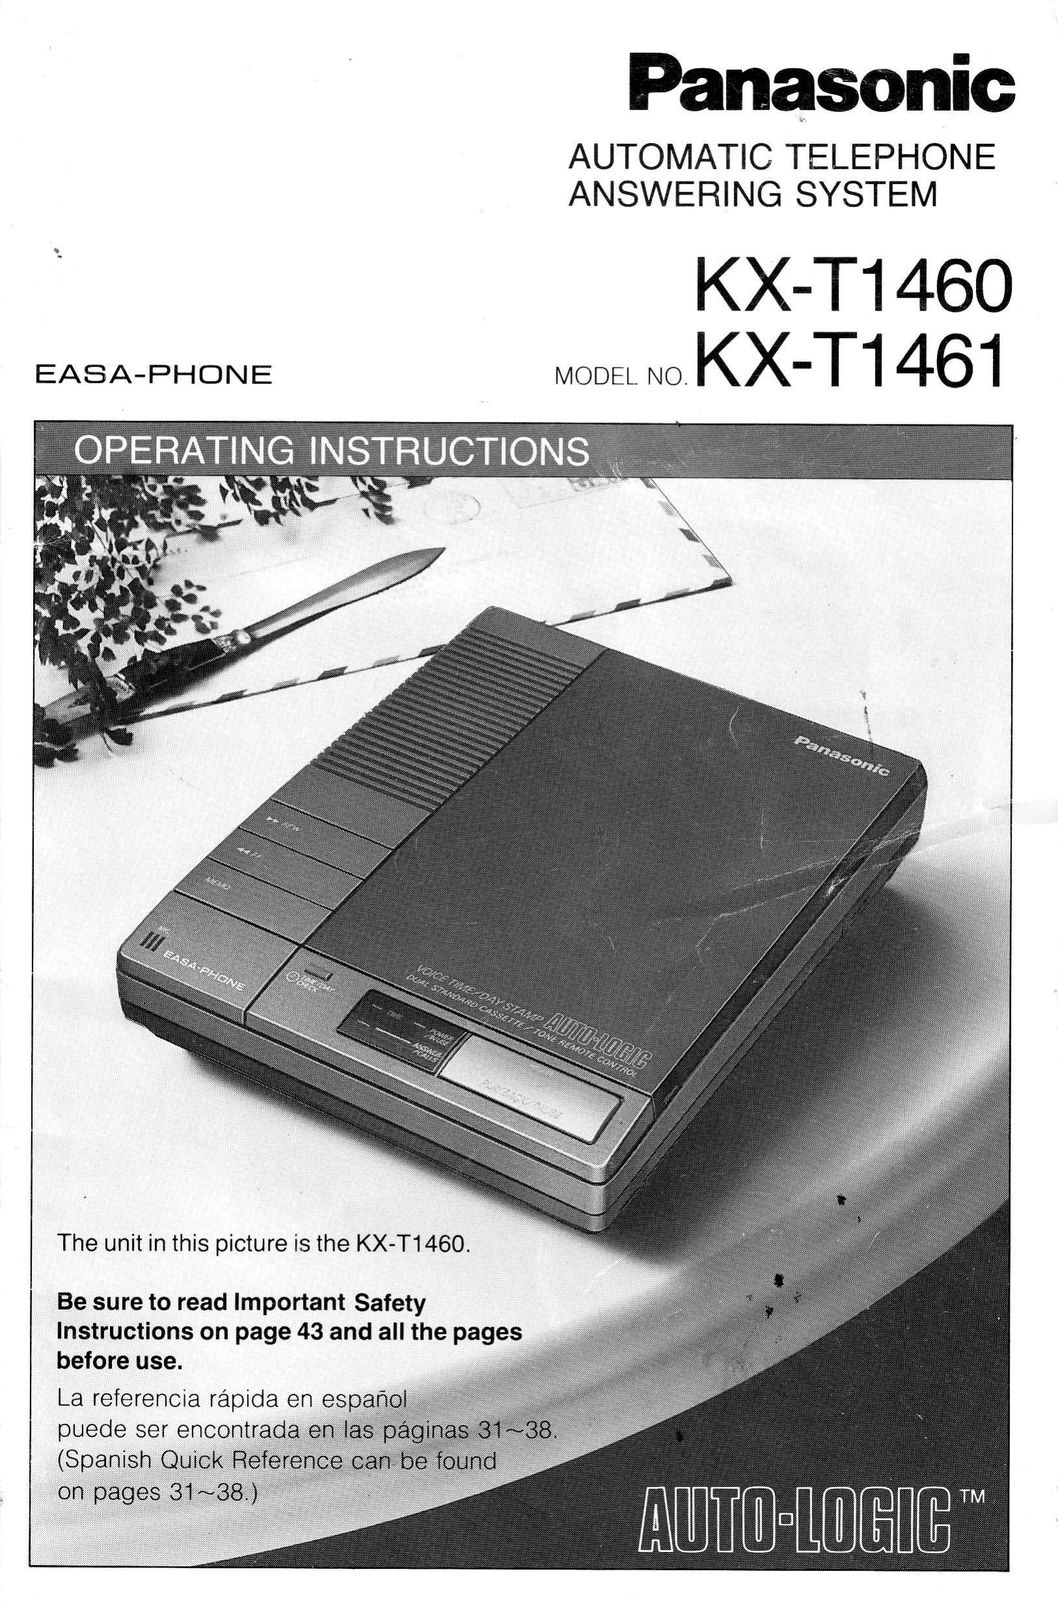 Panasonic KX-T1 460 Answering Machine User Manual